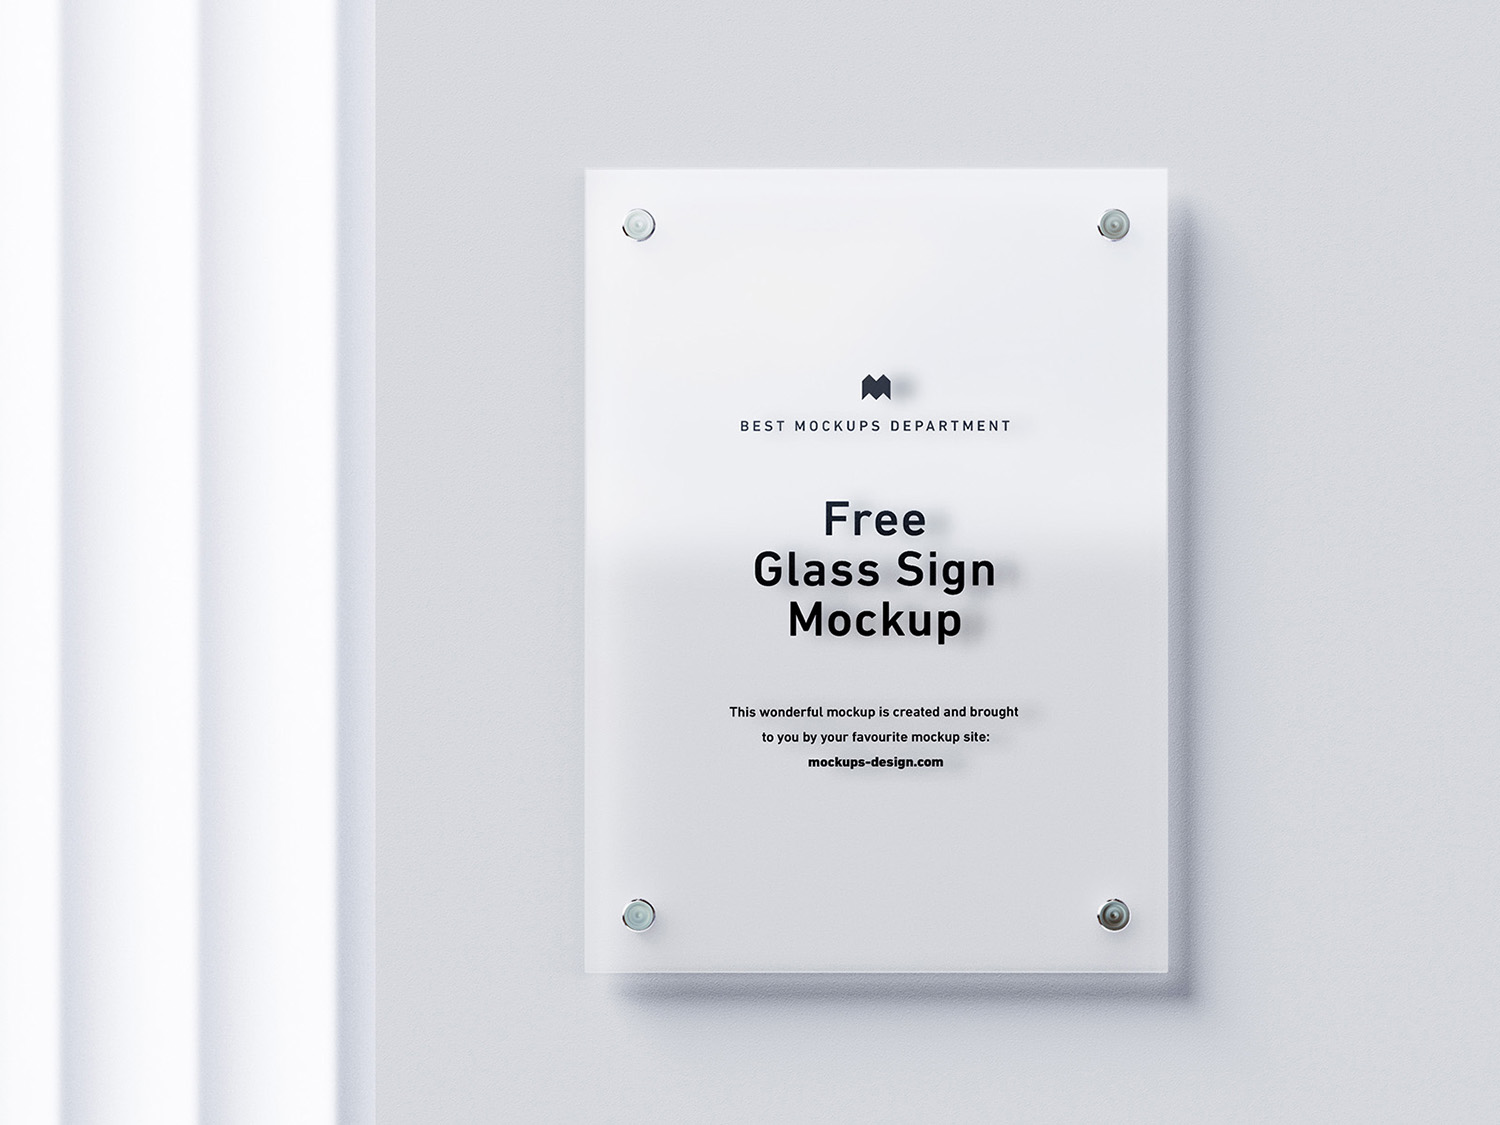 Free Glass Sign Mockup